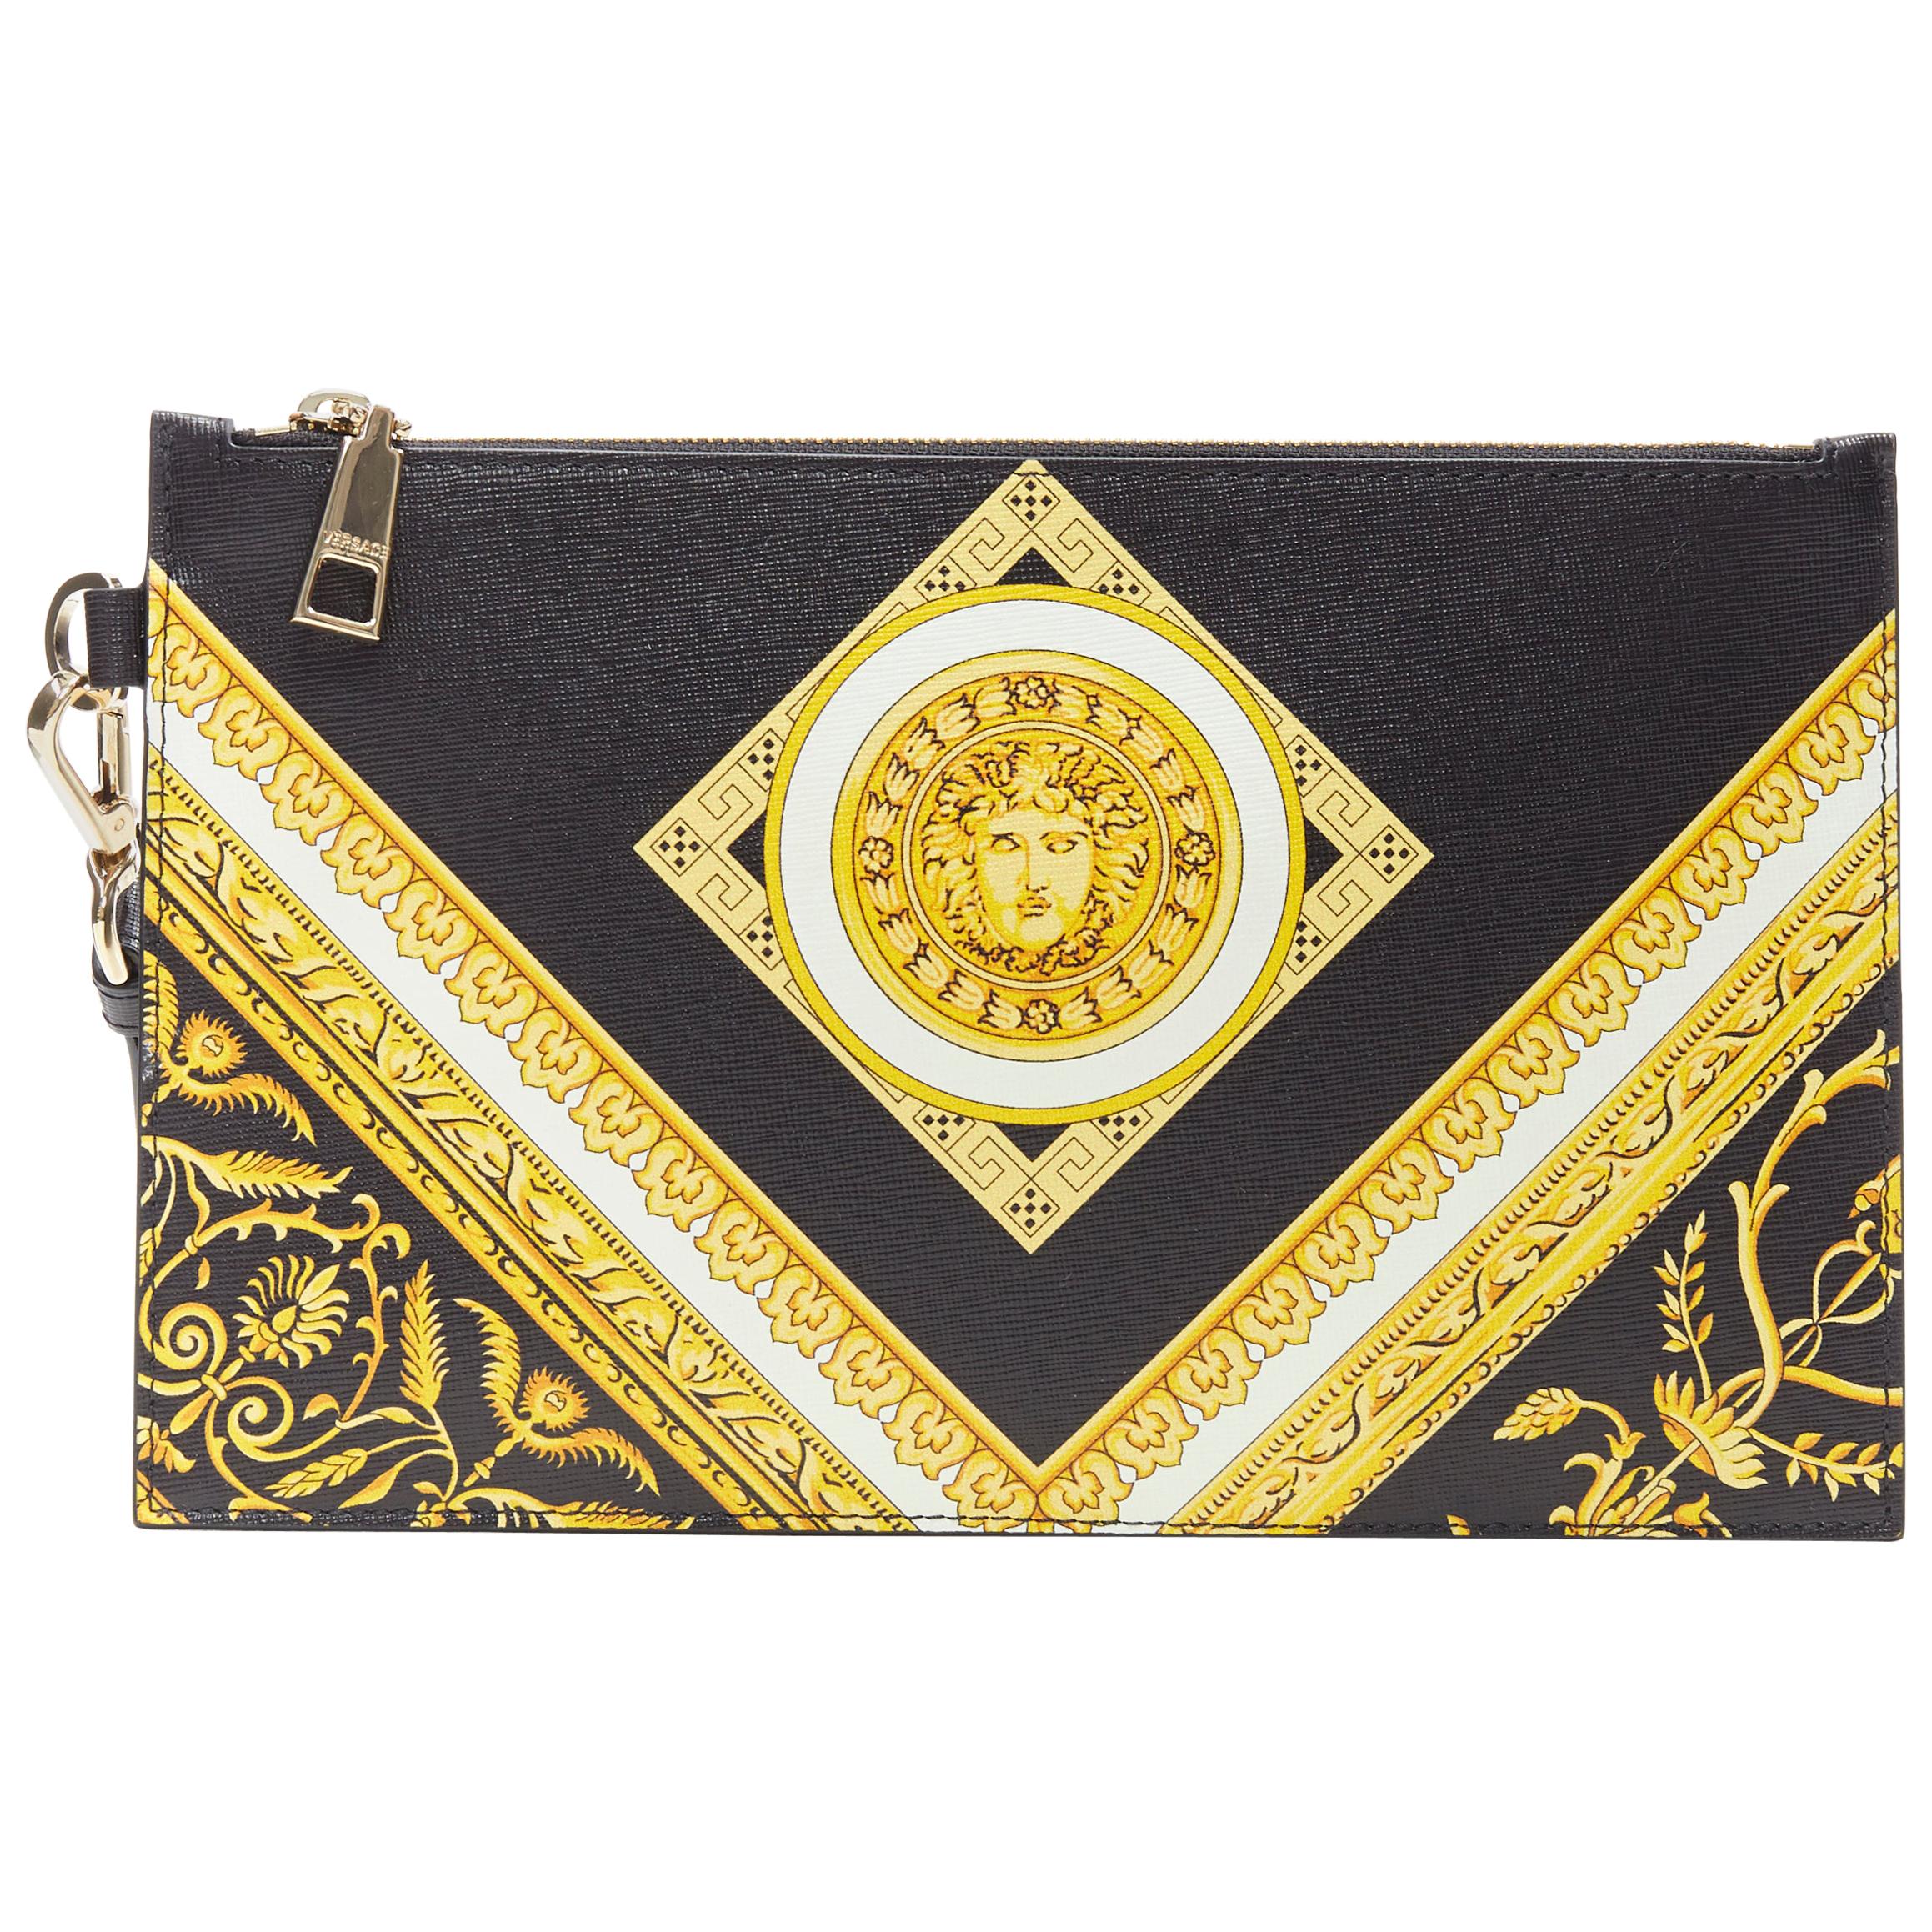 new VERSACE black gold baroque Medusa print saffiano calf leather zip clutch bag